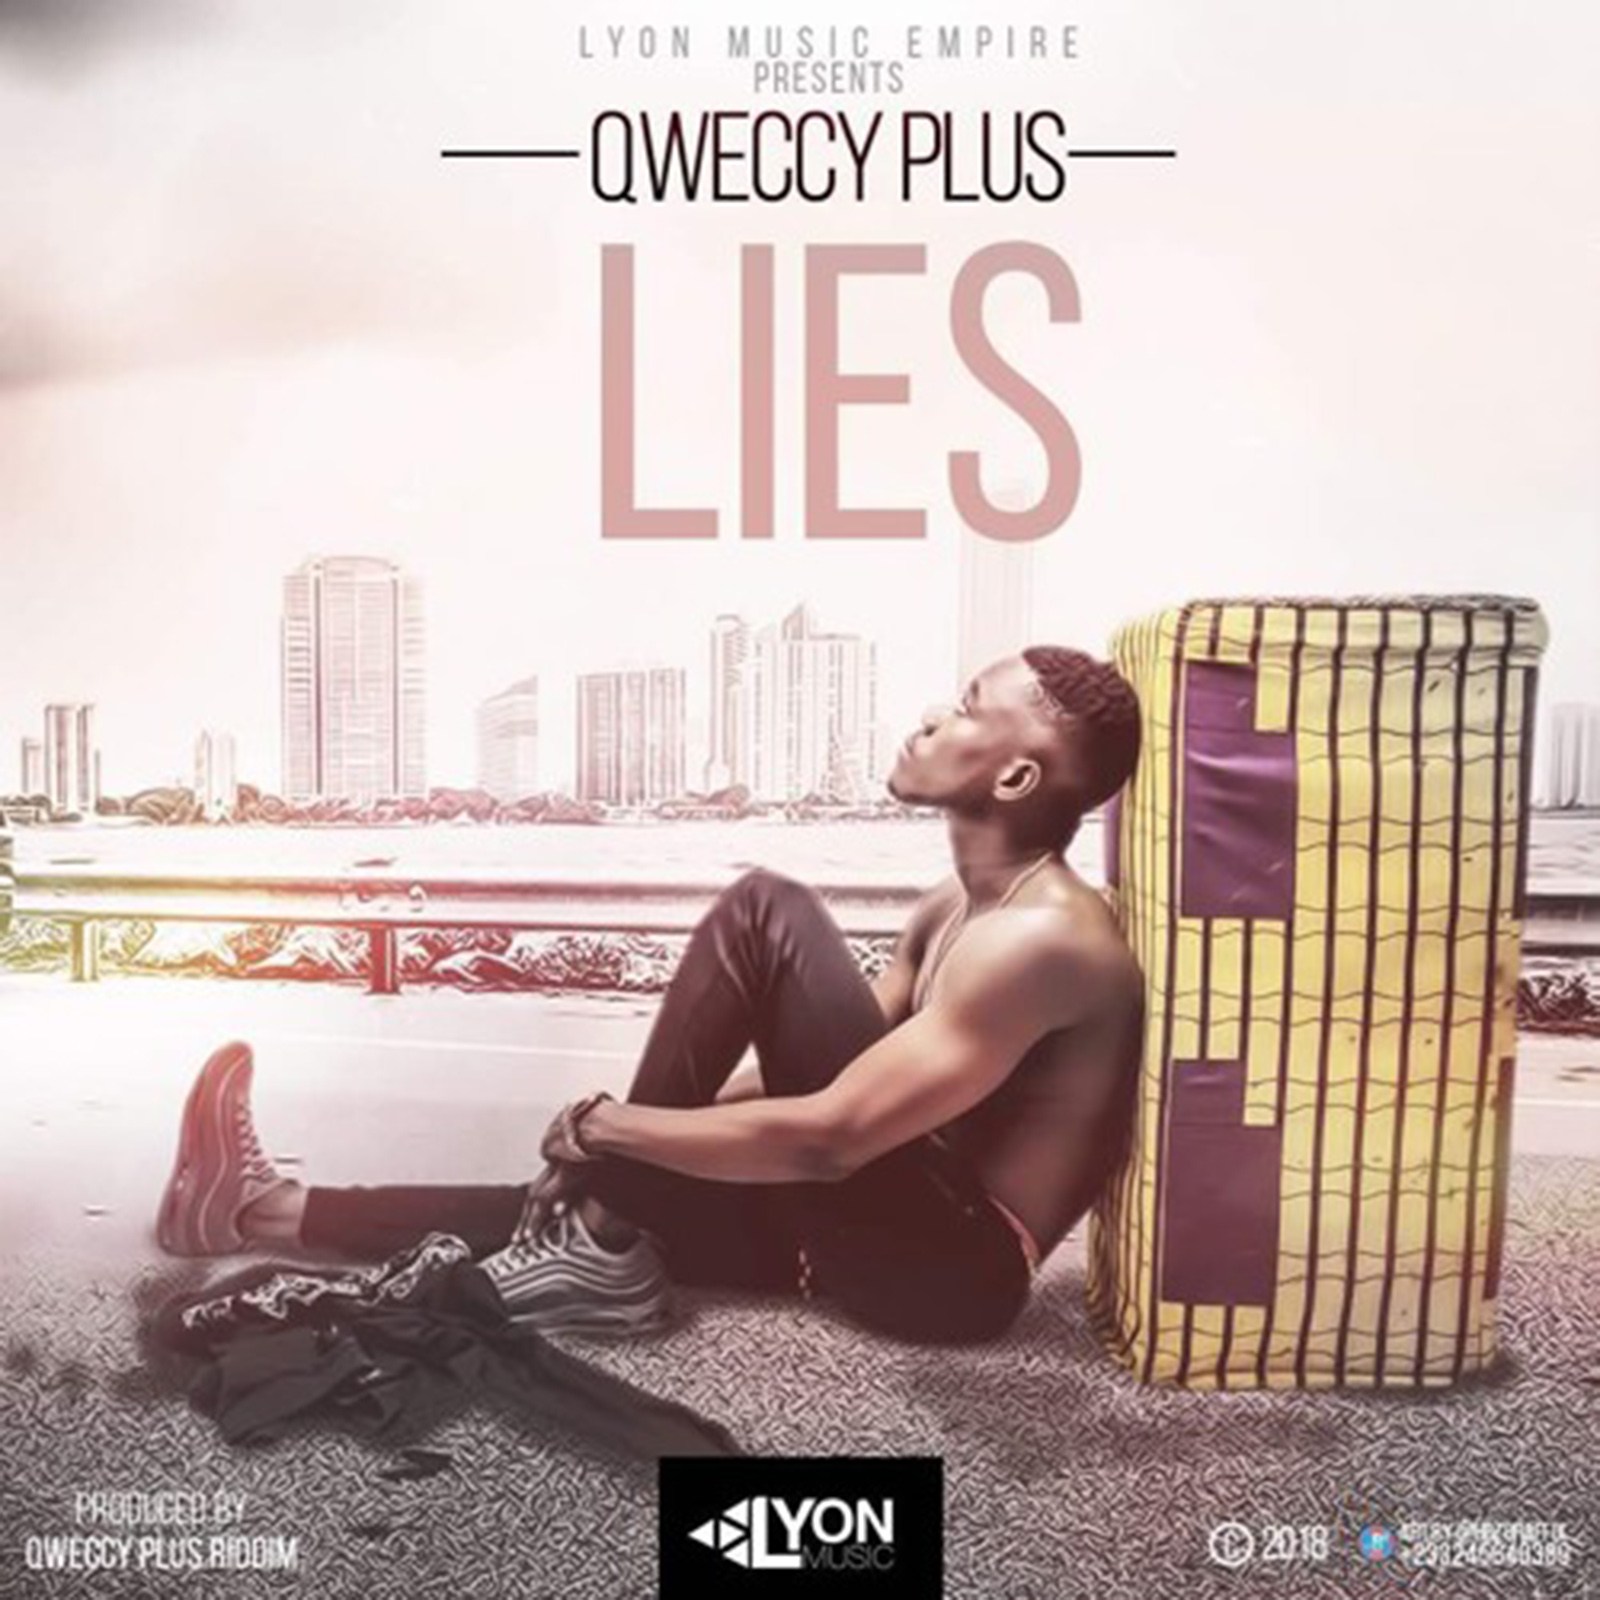 Lies by Qweecy Plus